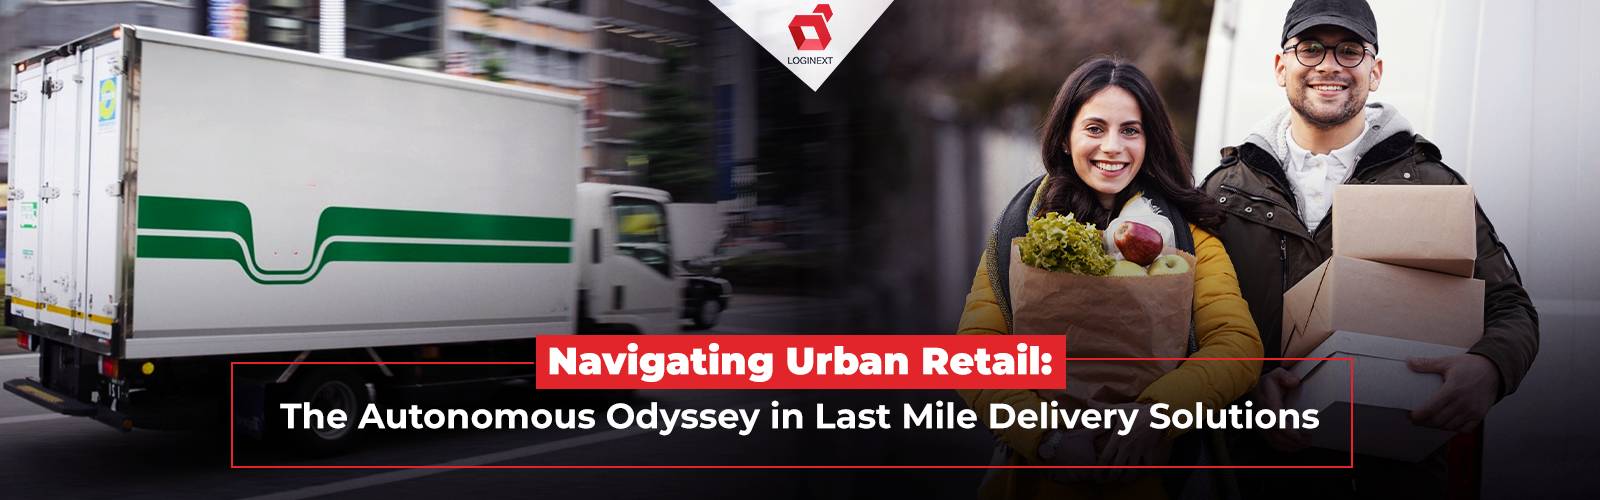 The Autonomous Odyssey i Last Mile Delivery Solutions